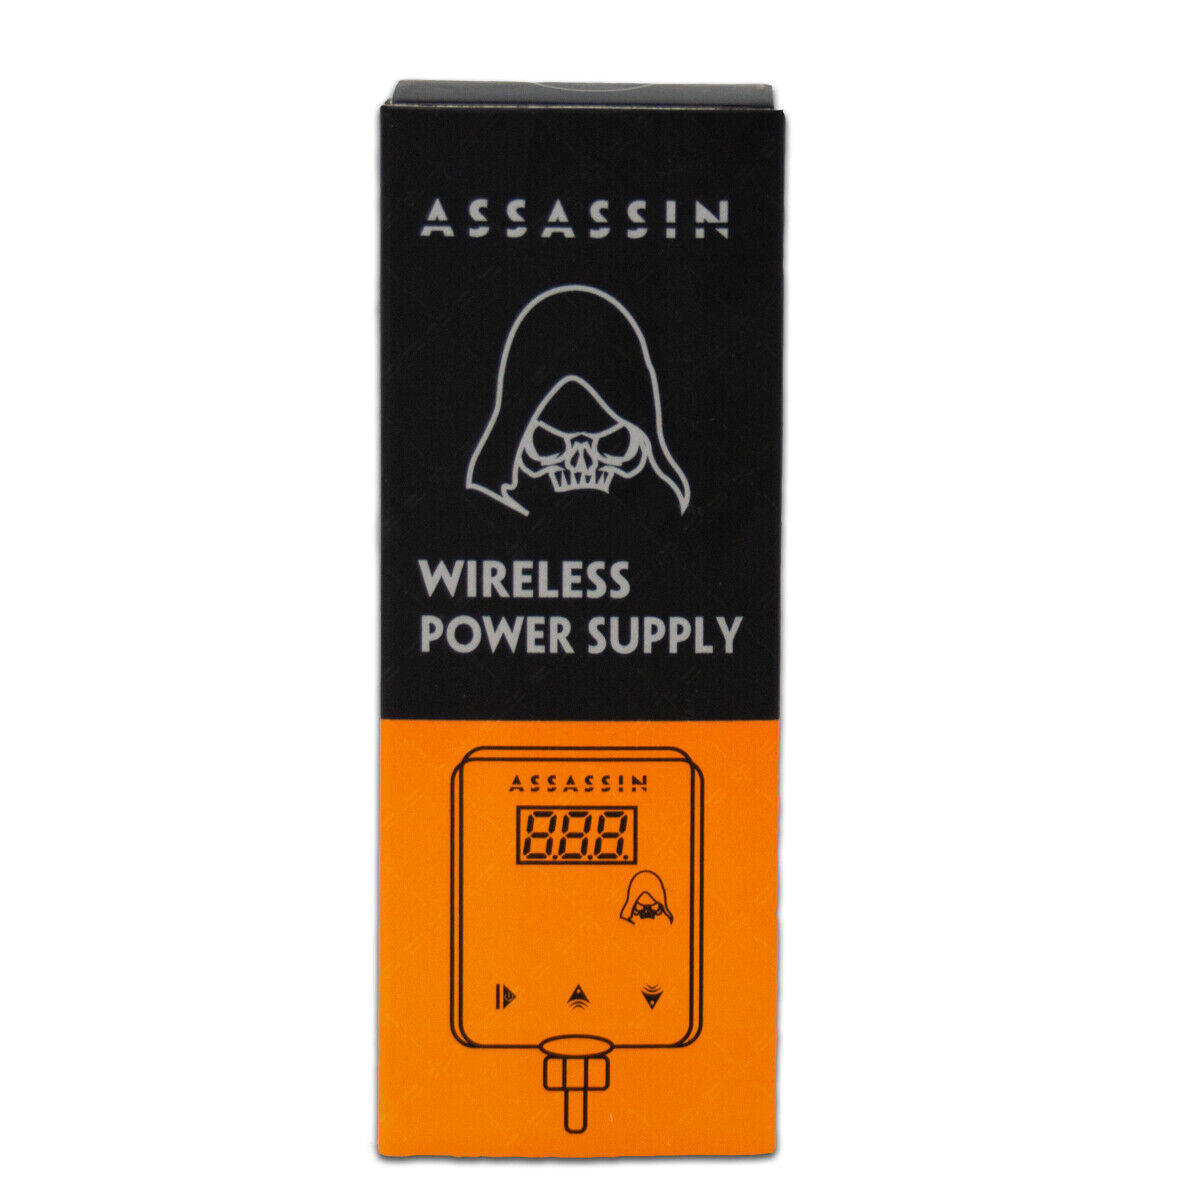 Assassin Wireless Power Supply